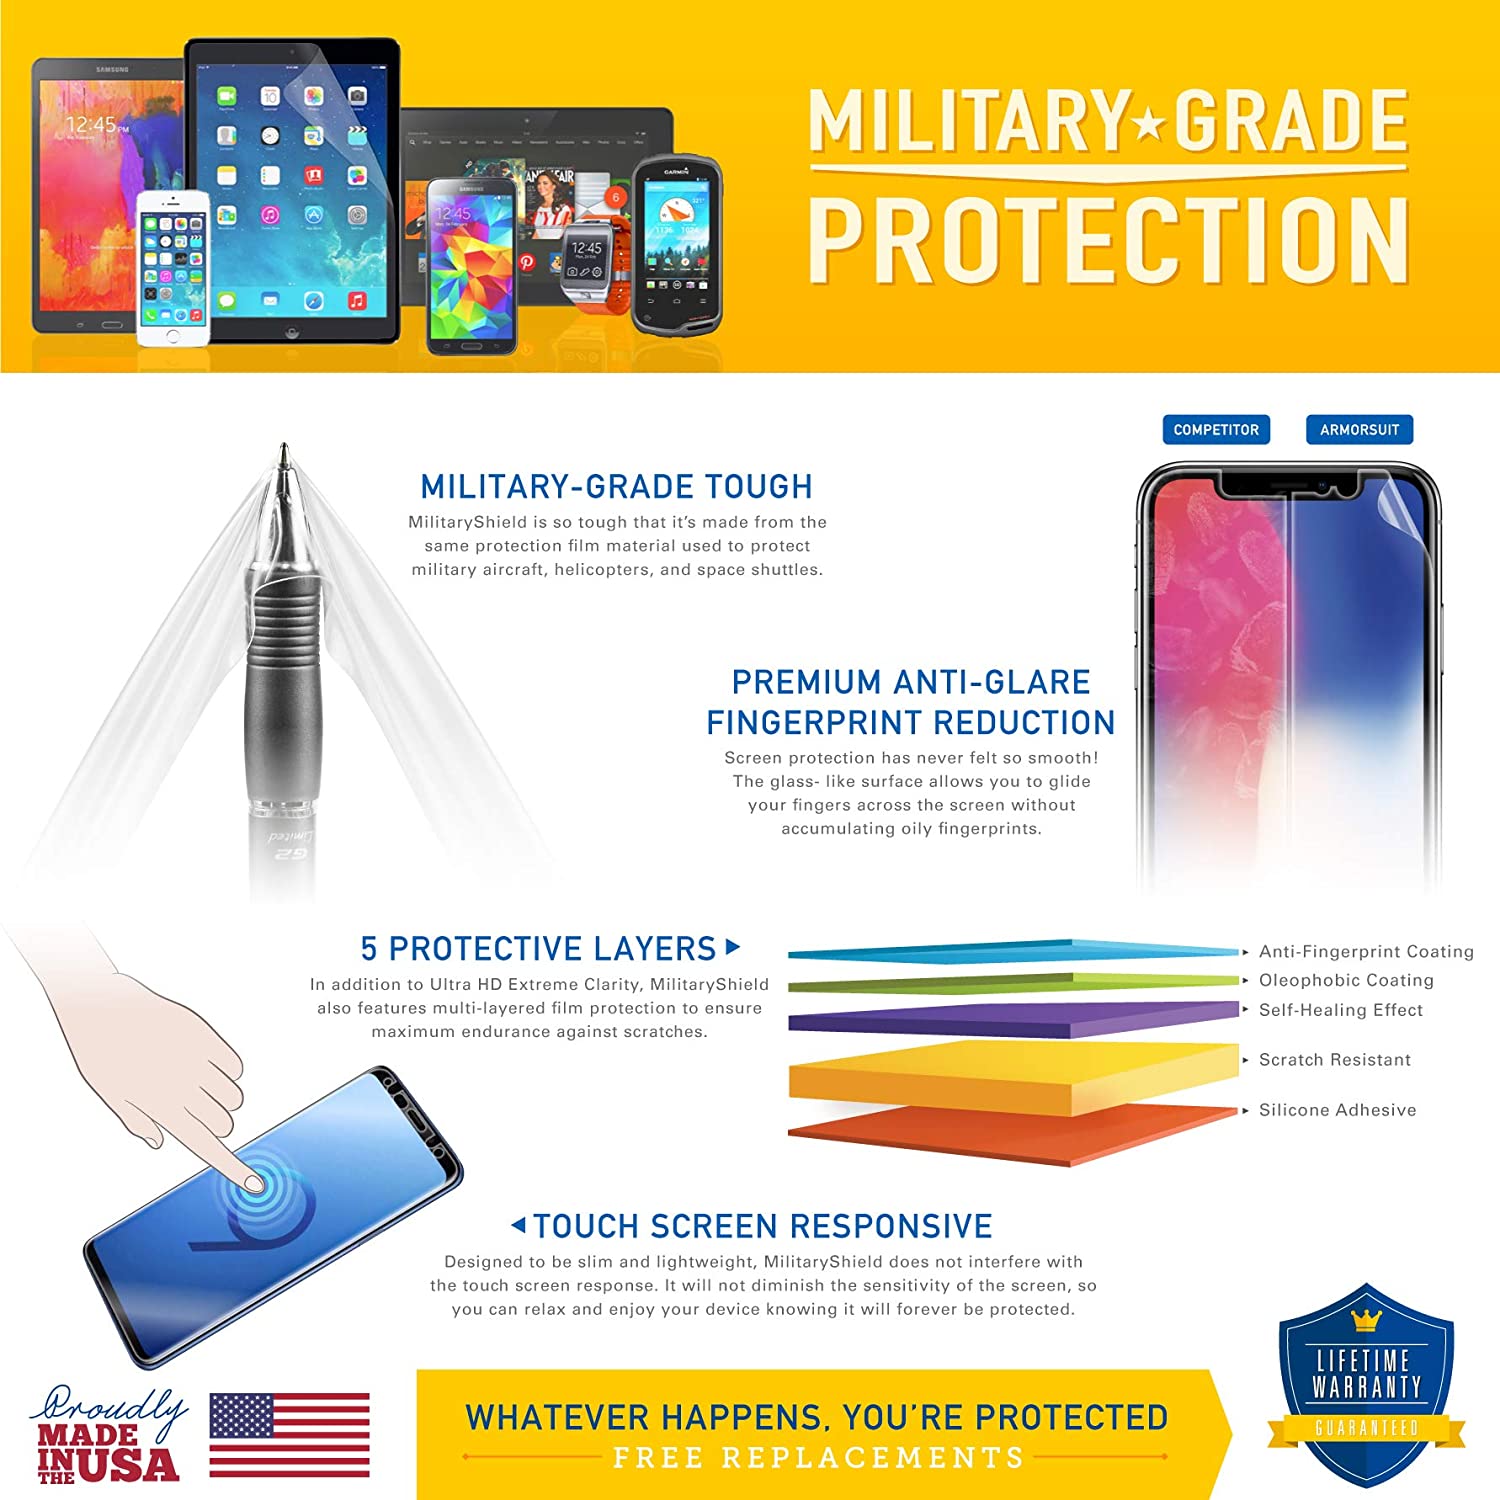 Samsung Focus 2 Screen Protector + White Carbon Fiber Skin Protector